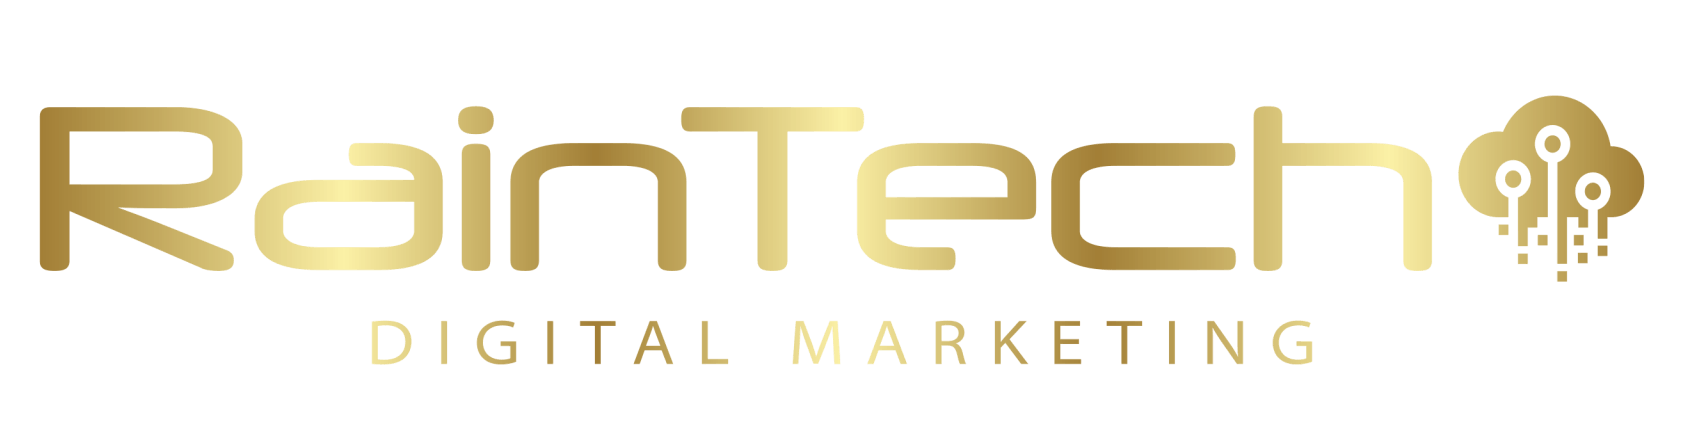 digital marketing agency Arizona